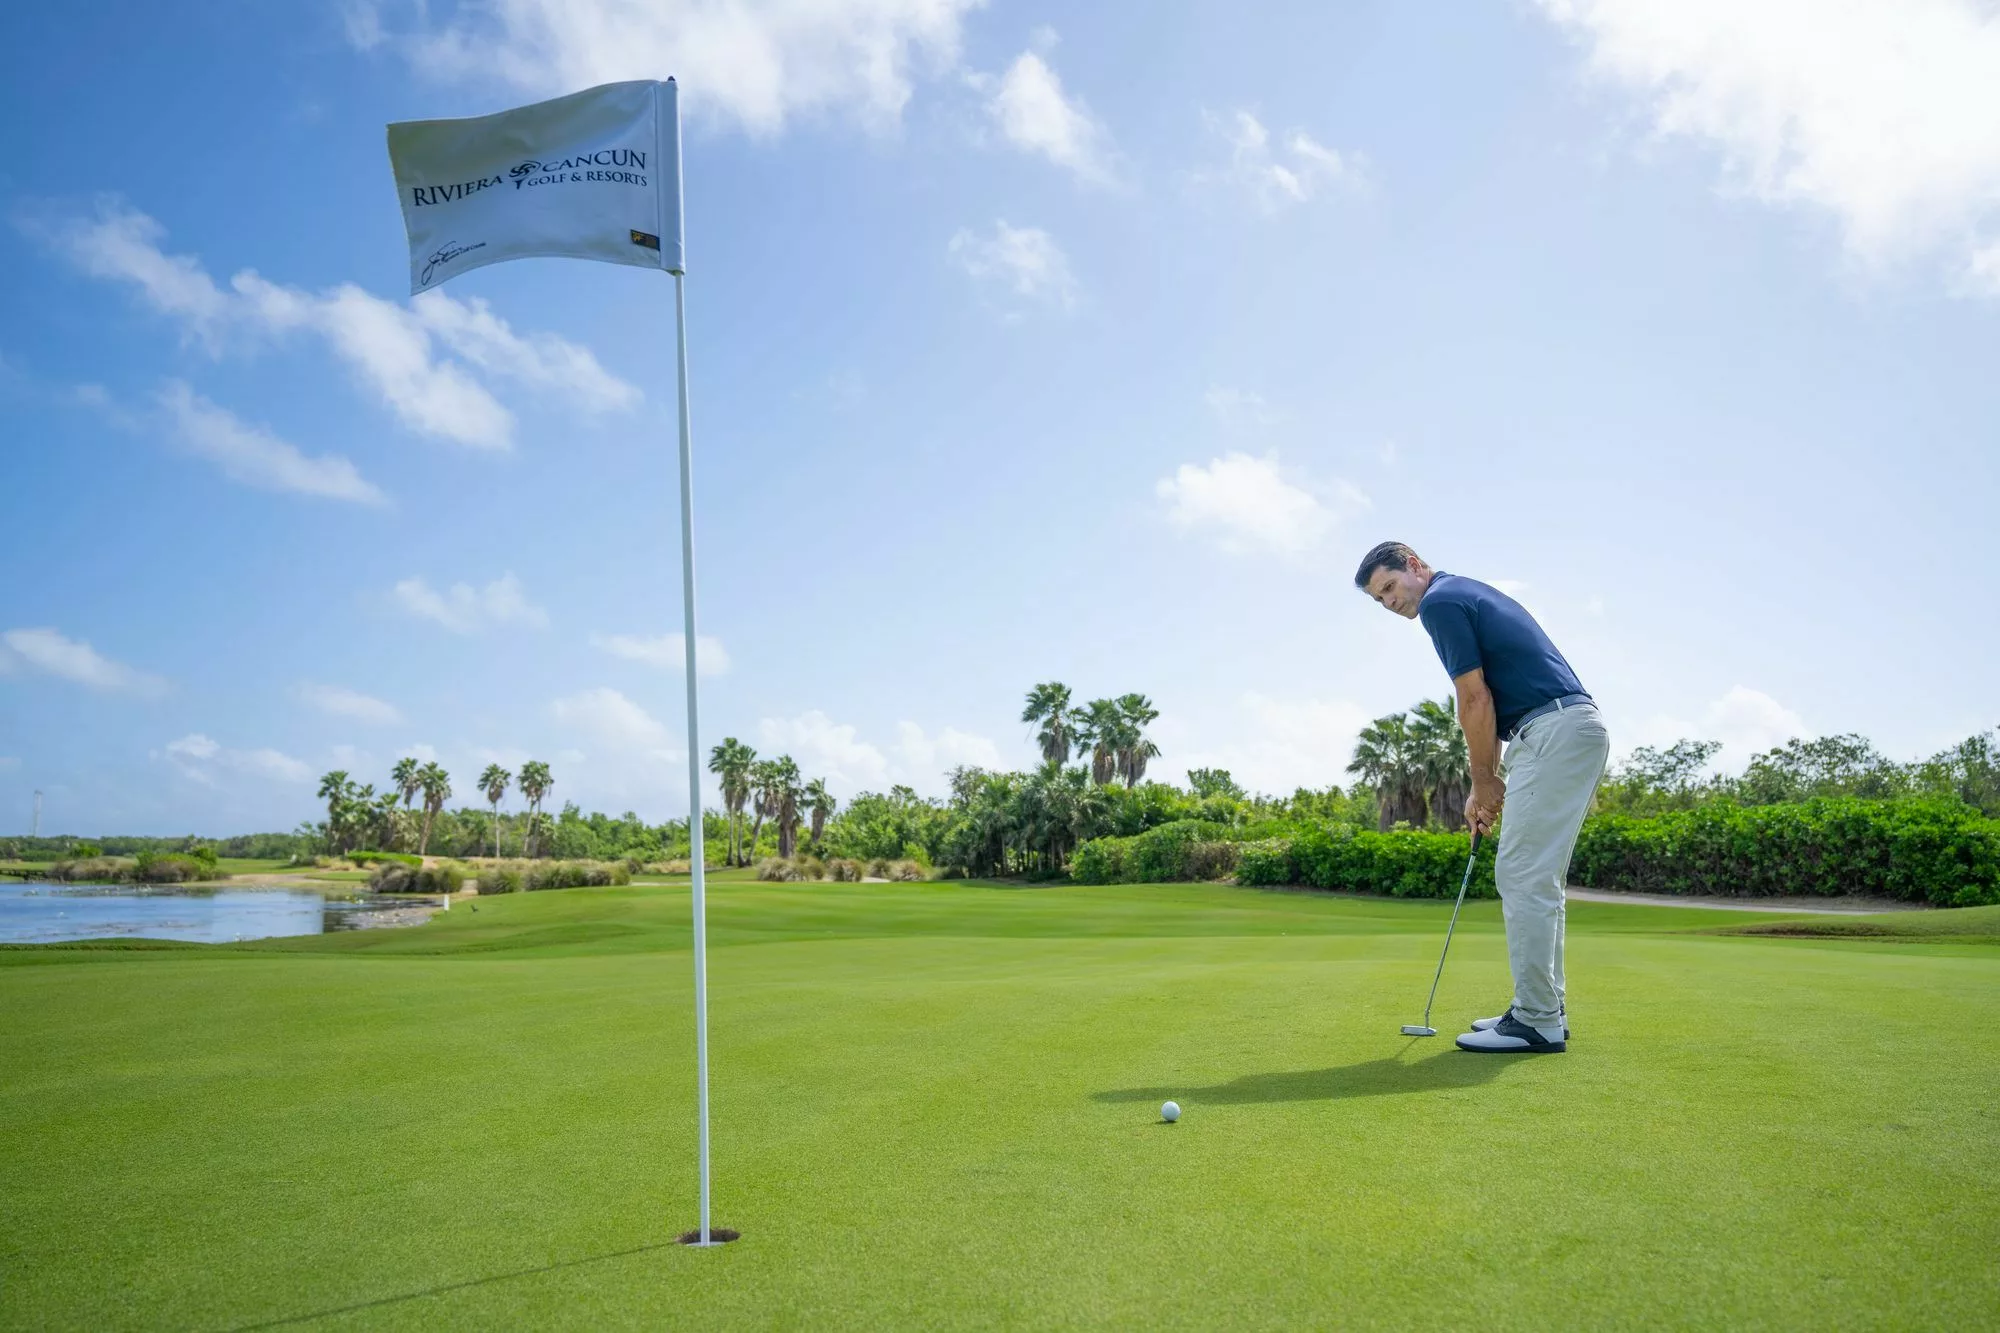 Moon Palace Cancun - Riviera Cancun Golf Course Putting Green